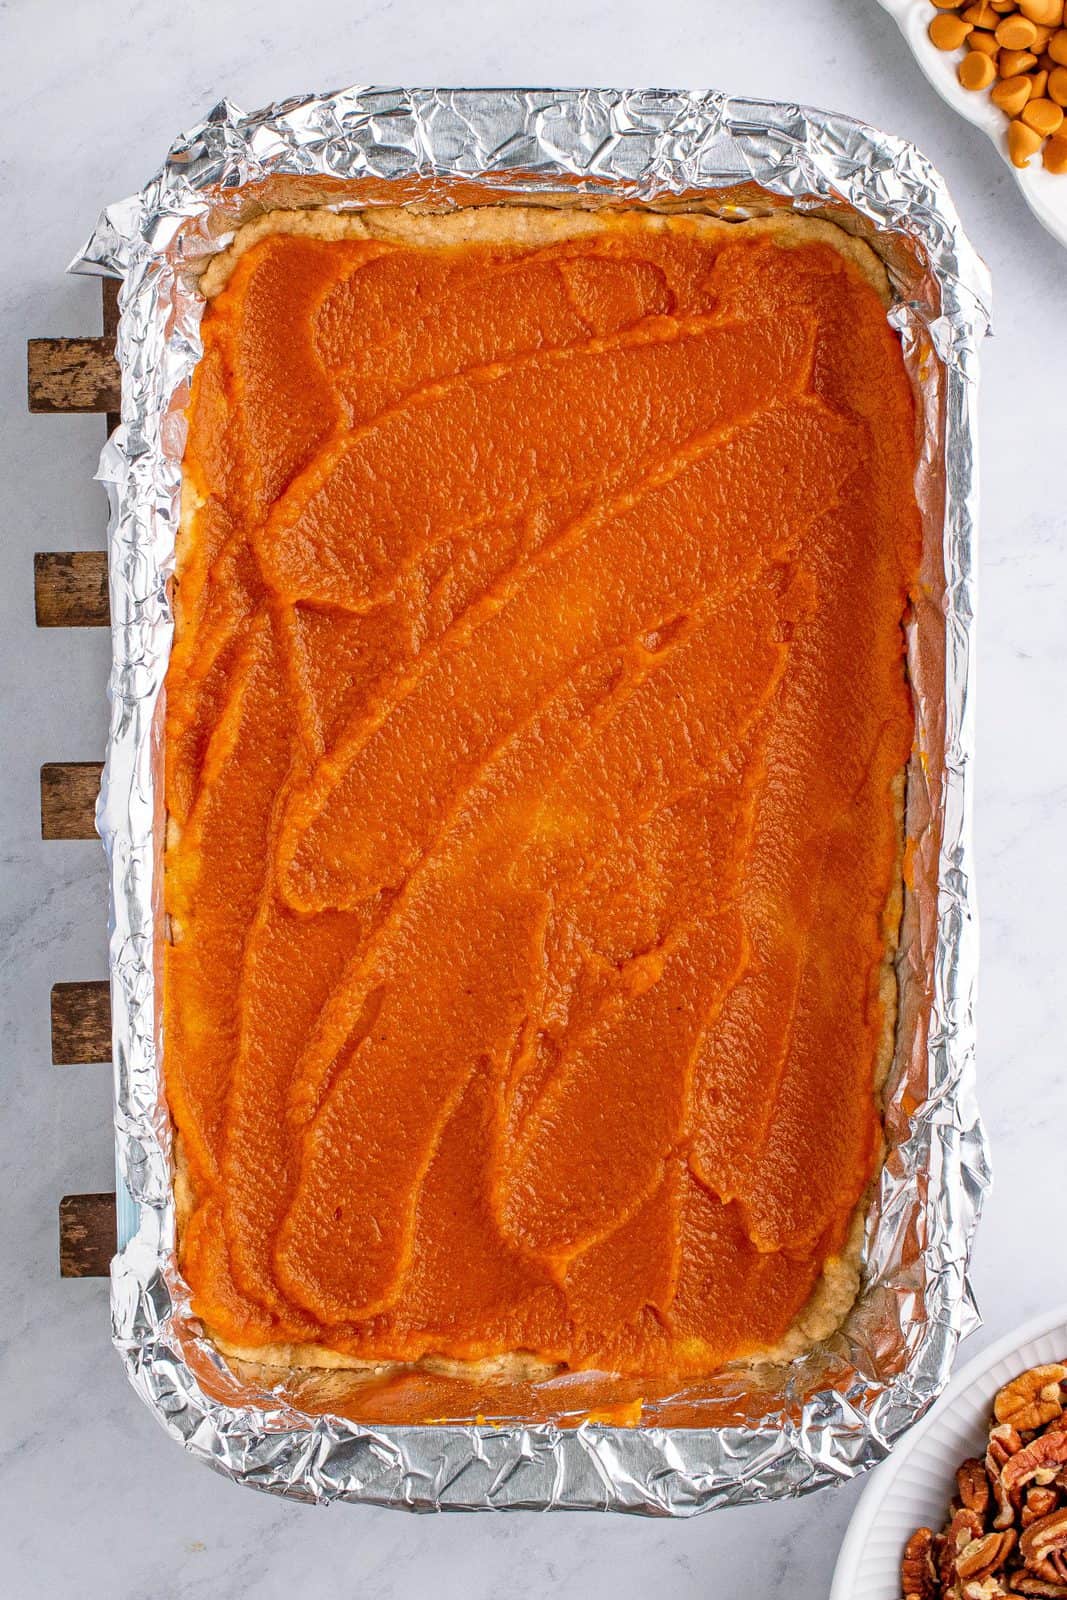 Pumpkin pie filling spread over crust.